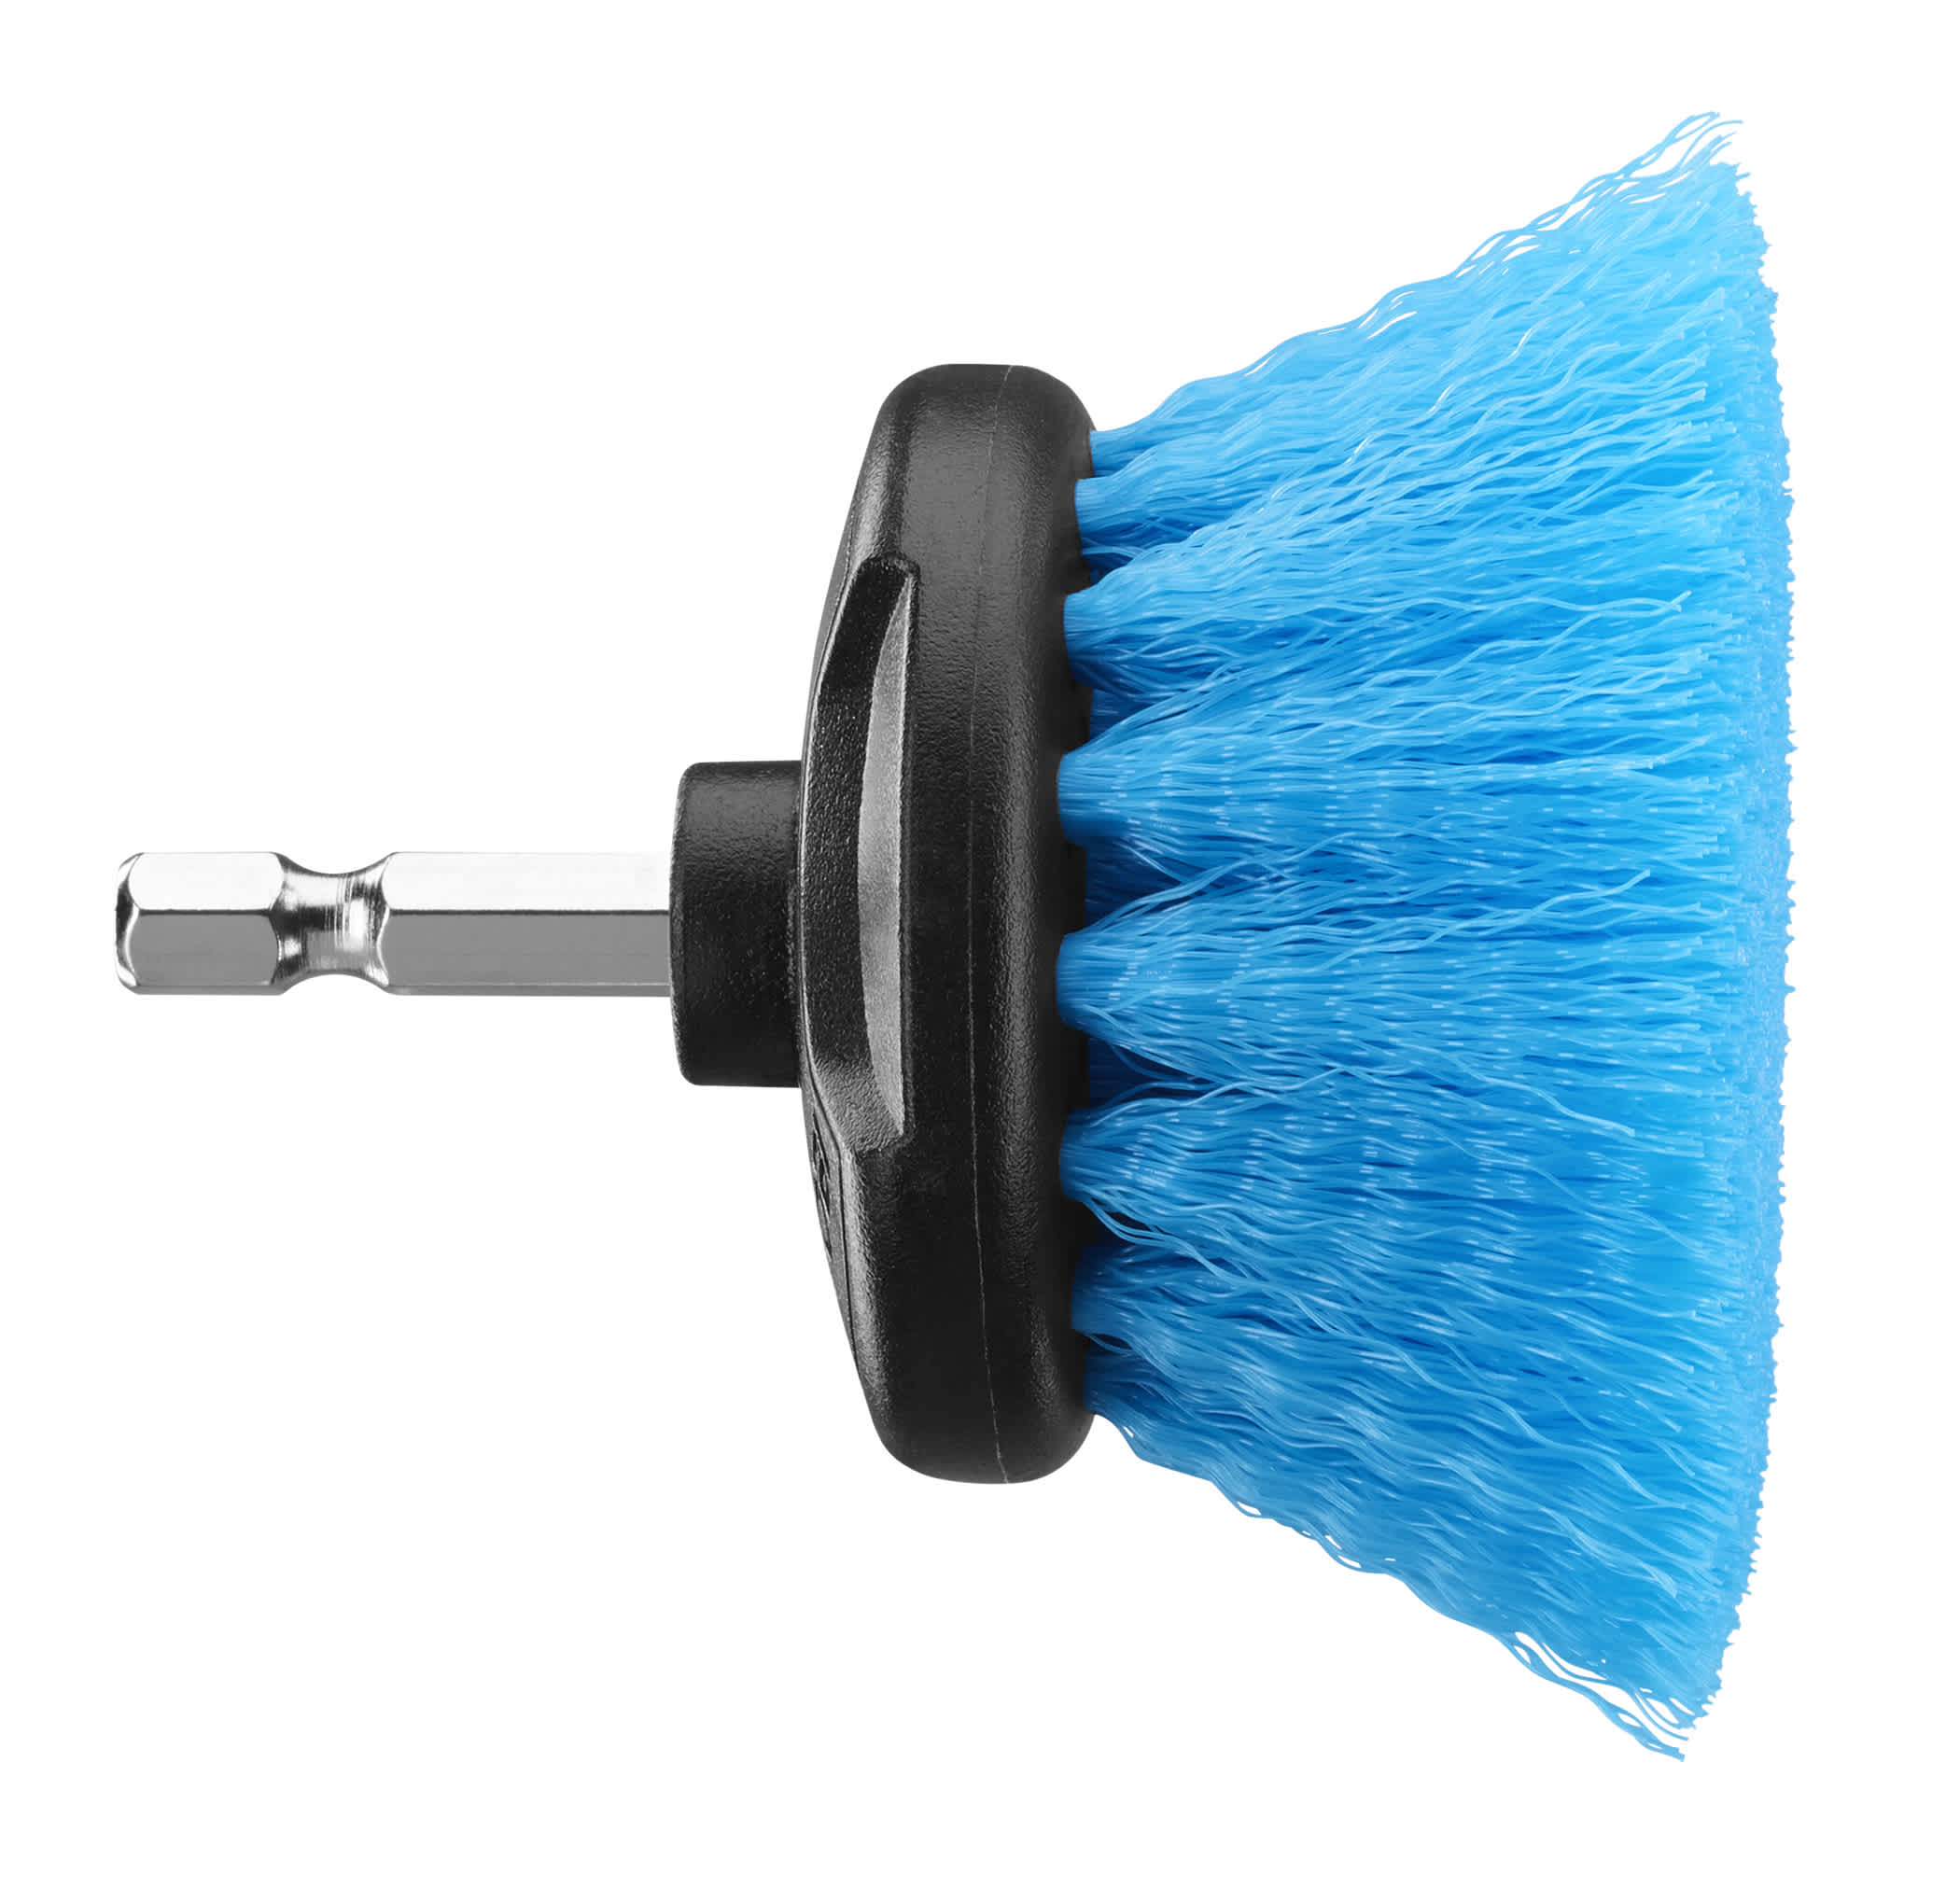 2 PC. Soft Bristle Brush Cleaning Kit | RYOBI Tools